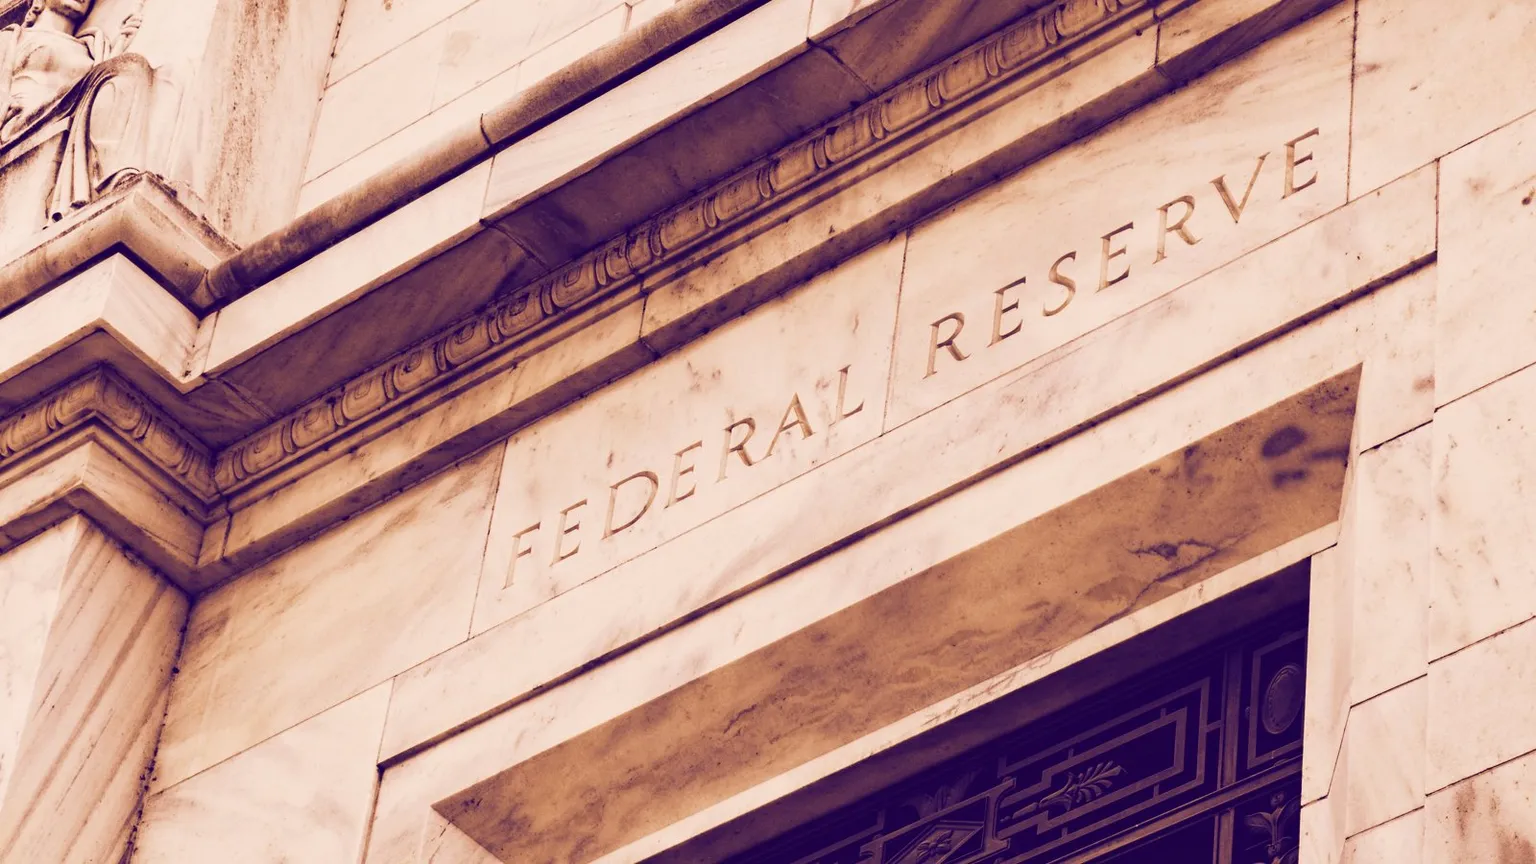 La Reserva Federal compra hasta 750 mil millones de dólares en ETFs. Imagen: Shutterstock